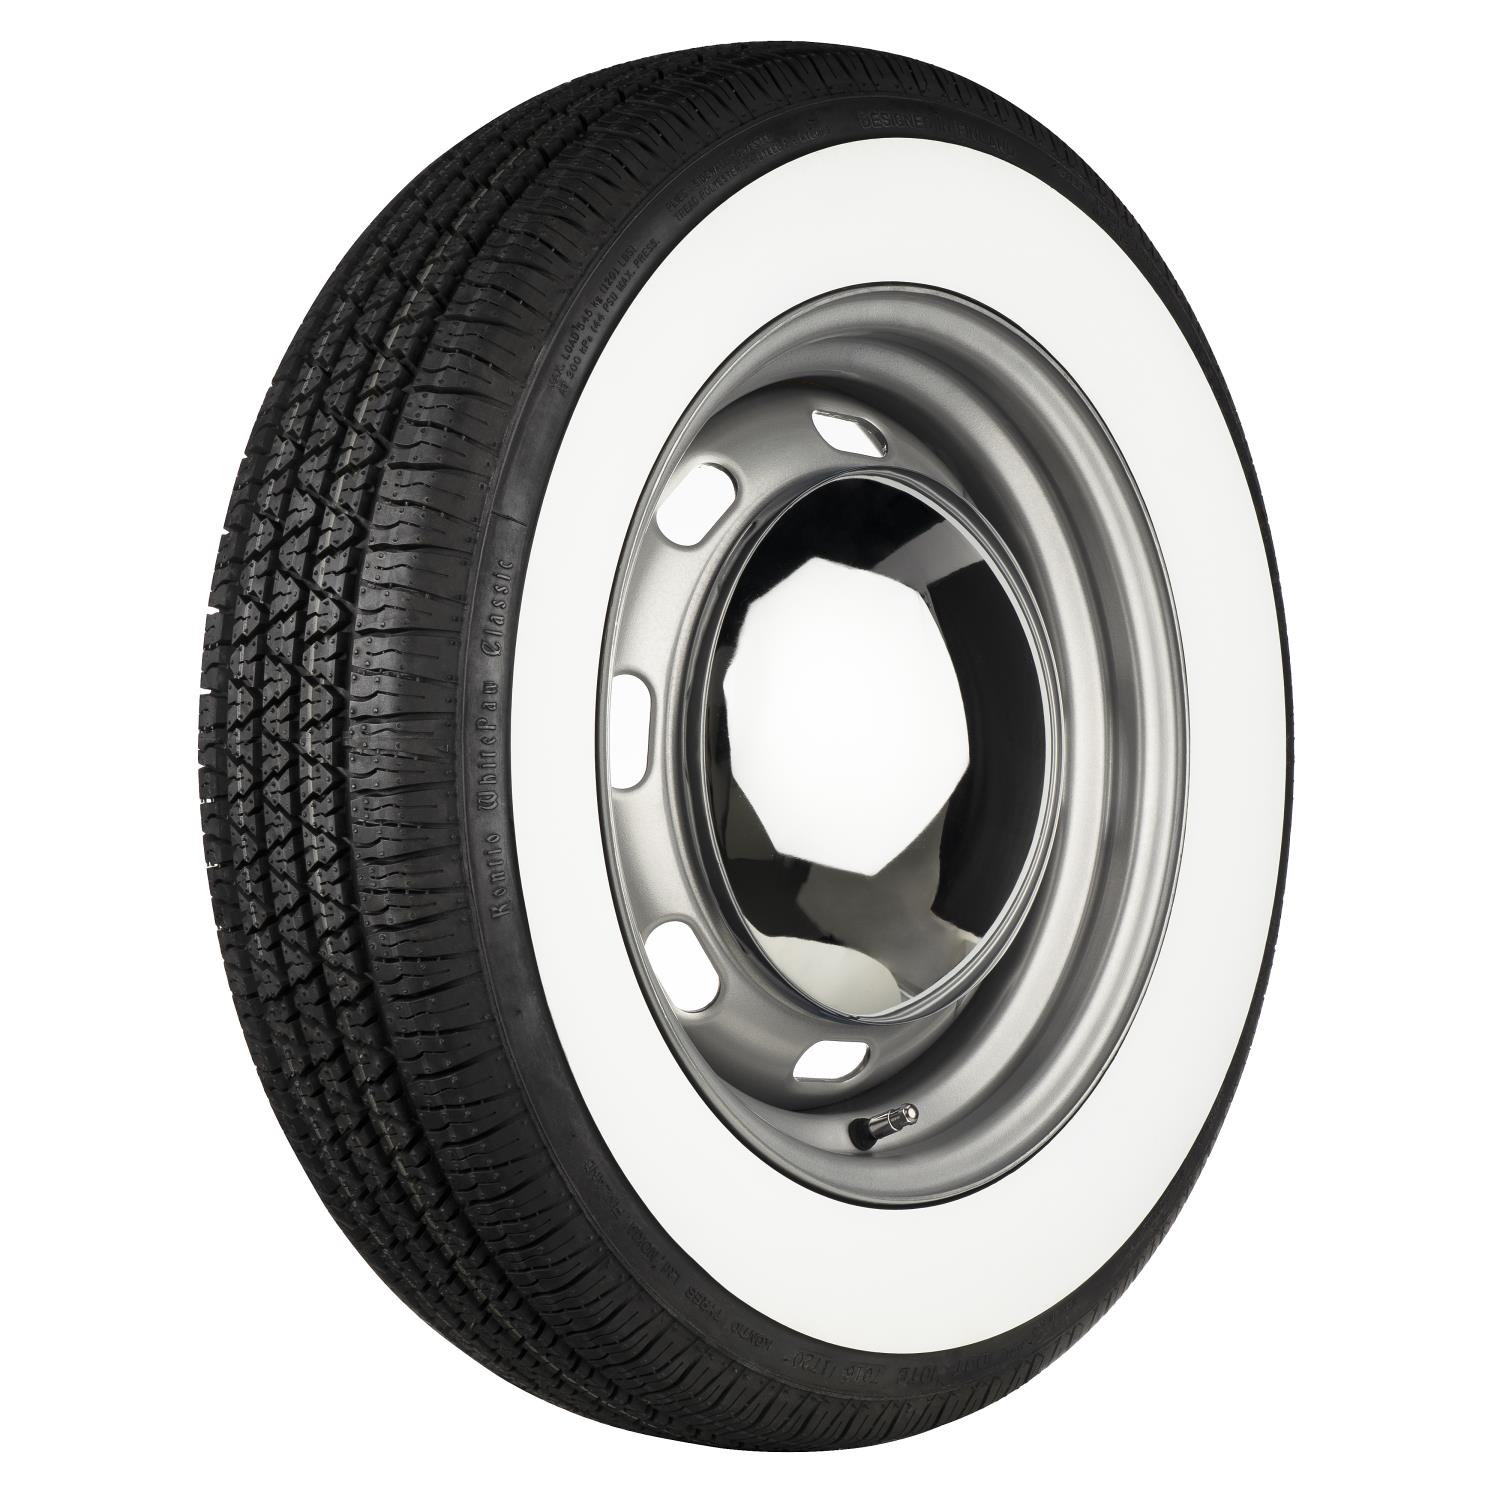 WhitePaw Classic Narrow Radial Tire, 185/80R13 [Whitewall]